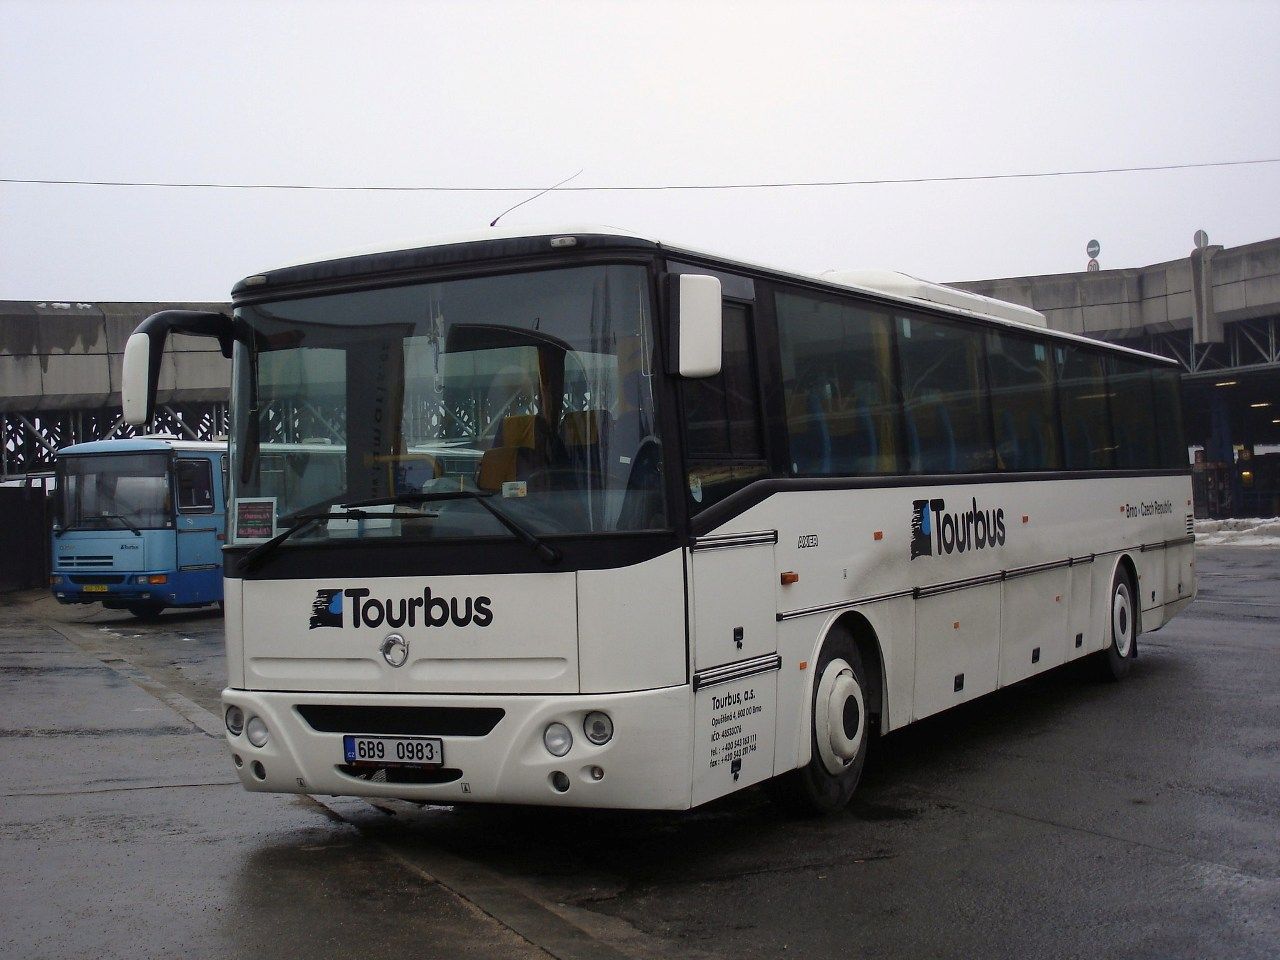 Tourbus AXER_6B9 0983